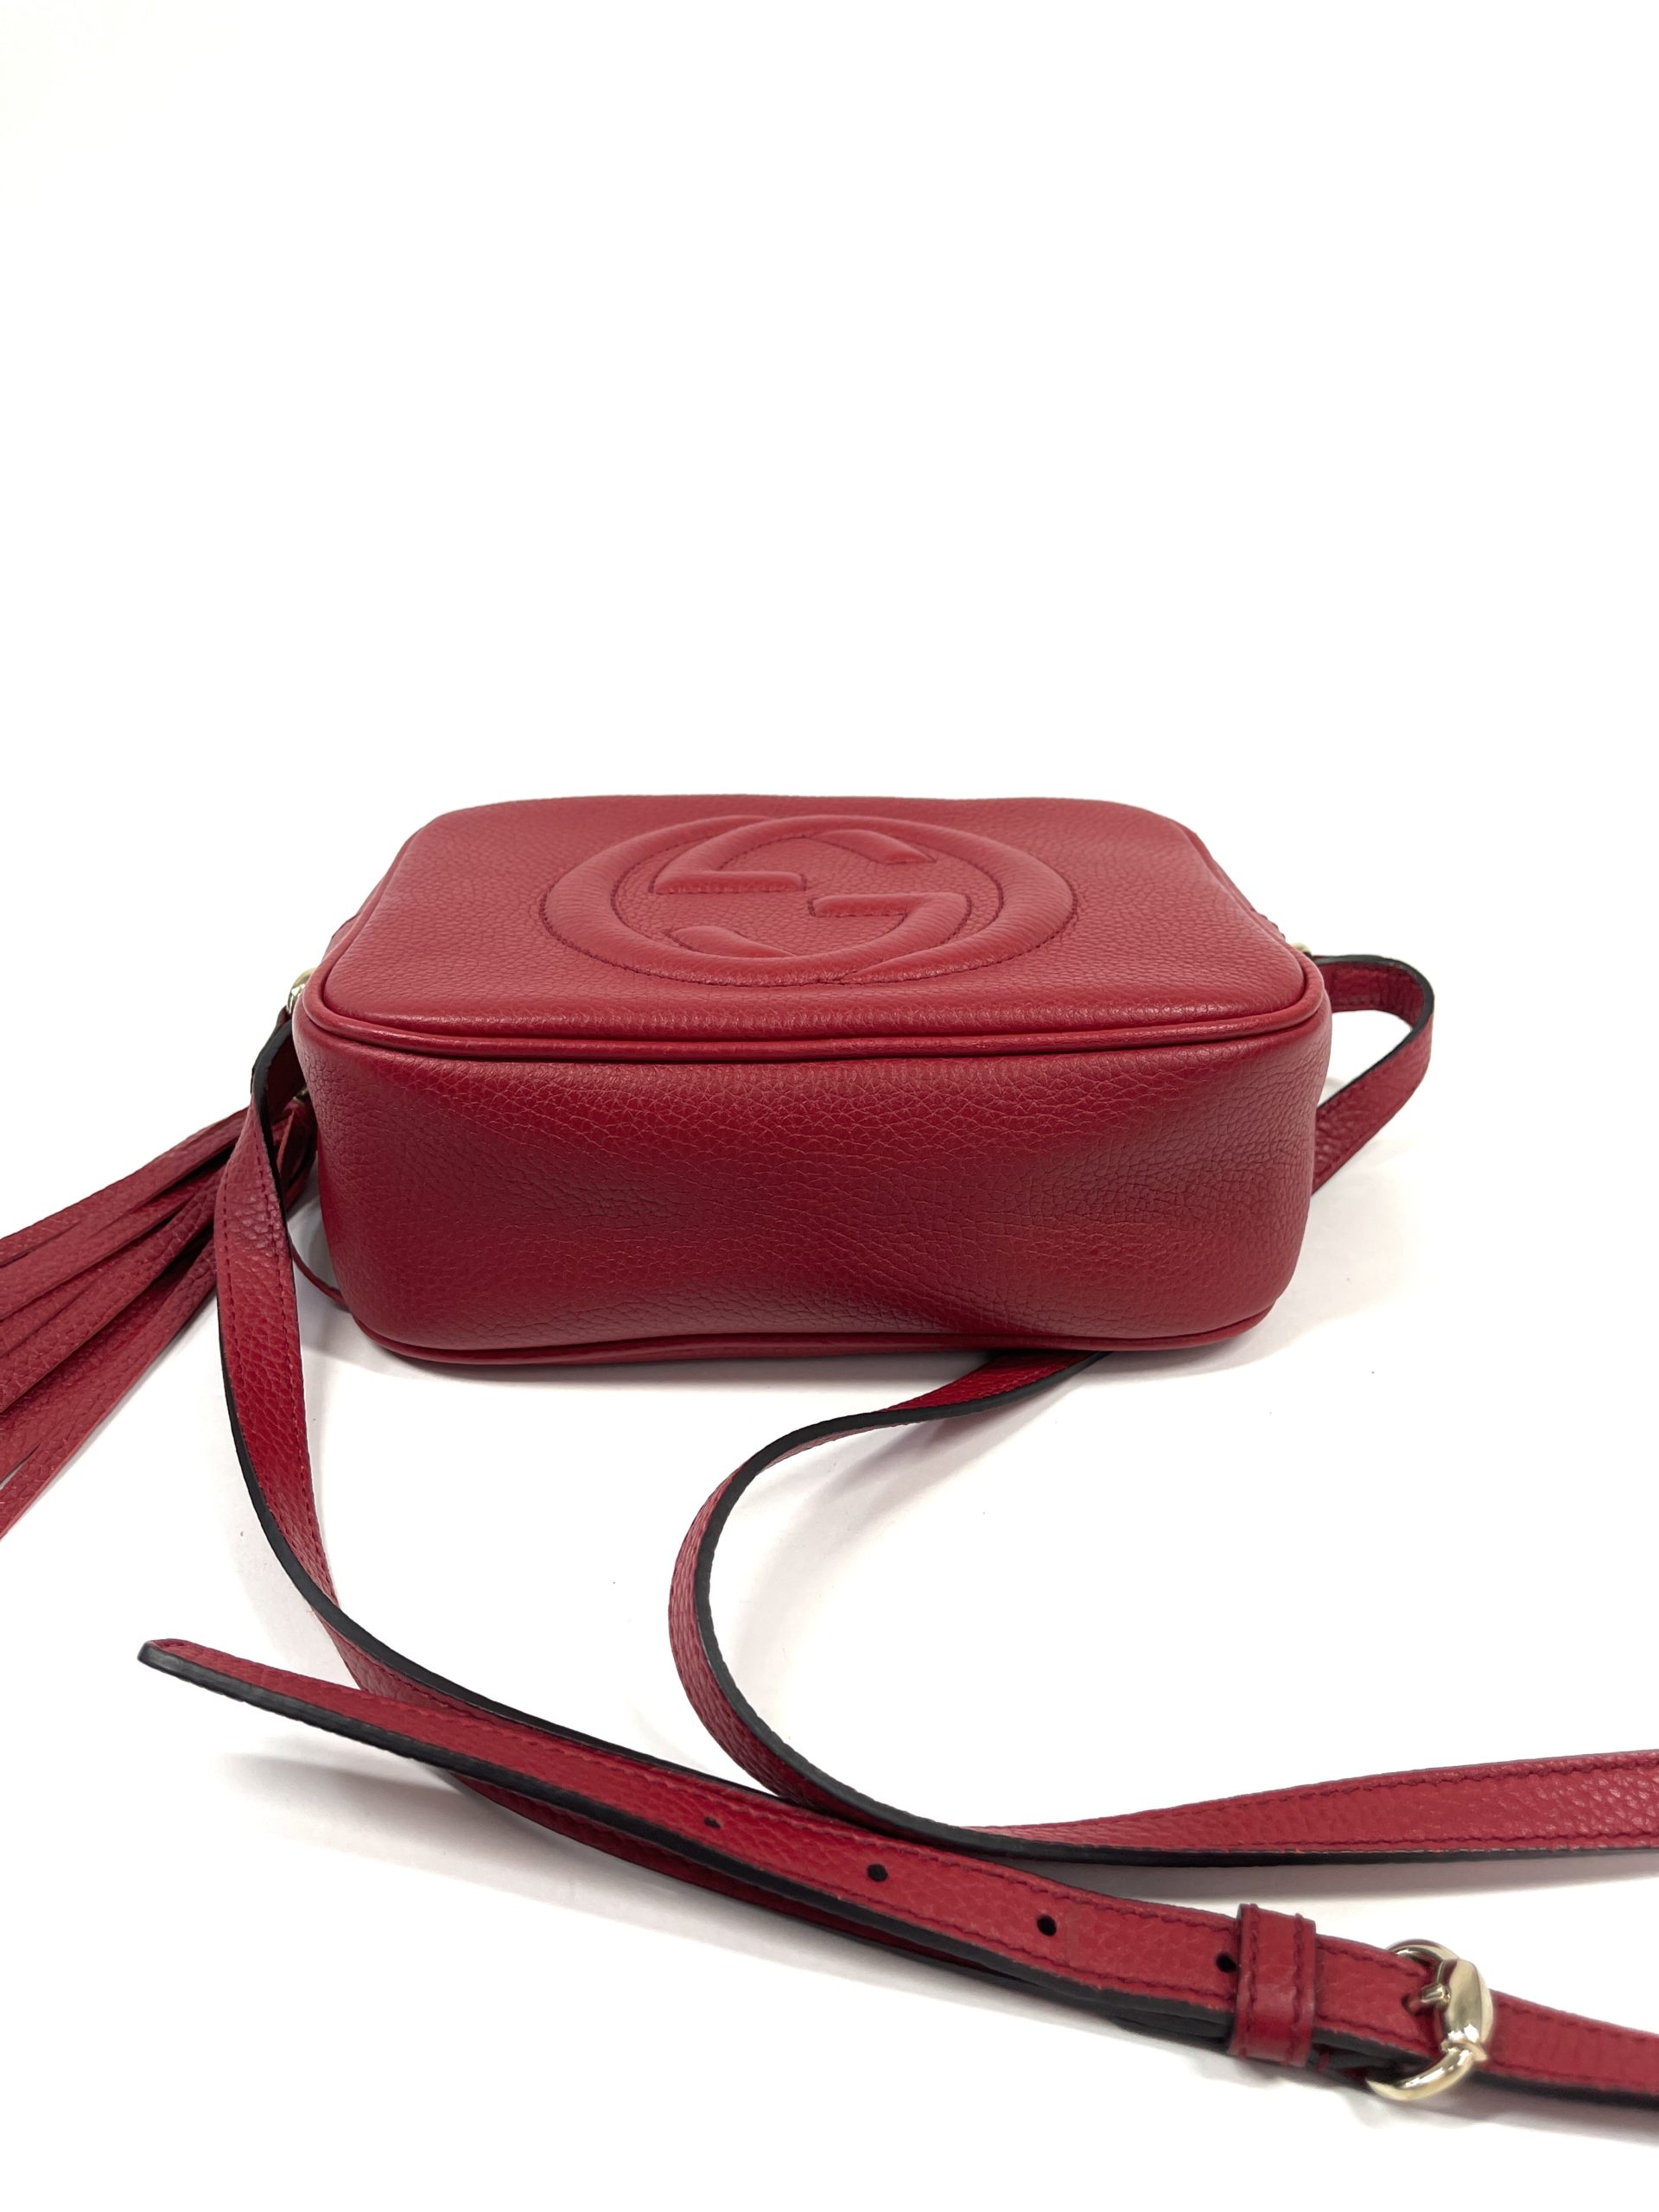 Gucci Soho Disco Red Leather GG Tassel Chain Crossbody Bag 536224 – ZAK BAGS  ©️